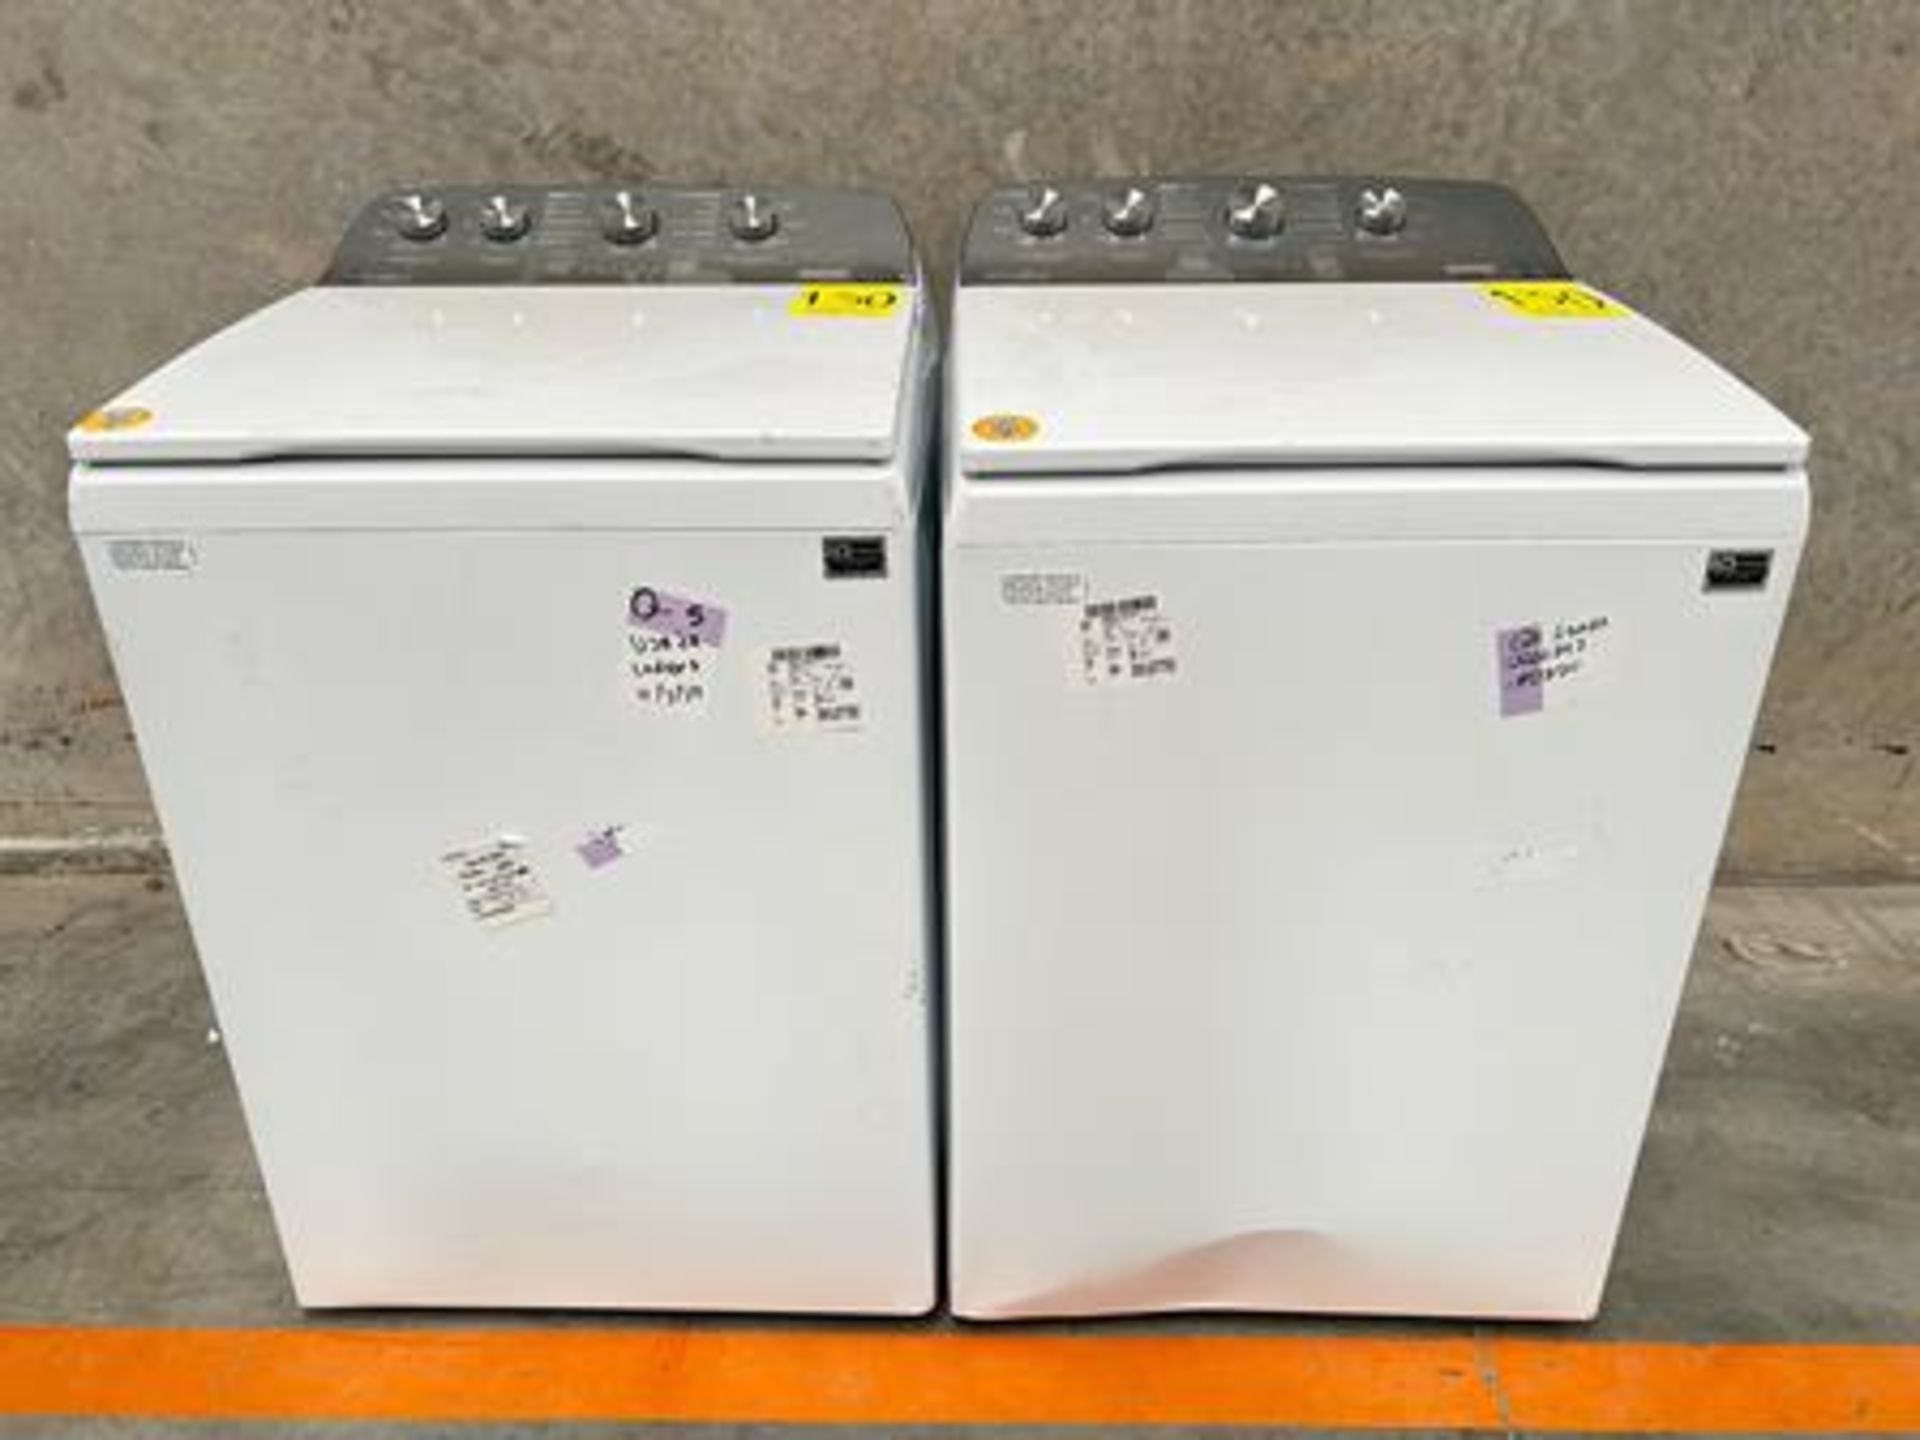 Lote de 2 lavadoras contiene: 1 Lavadora de 22 KG Marca WHIRPOOL, Modelo 8MWTW2224MPM0, Serie 41622